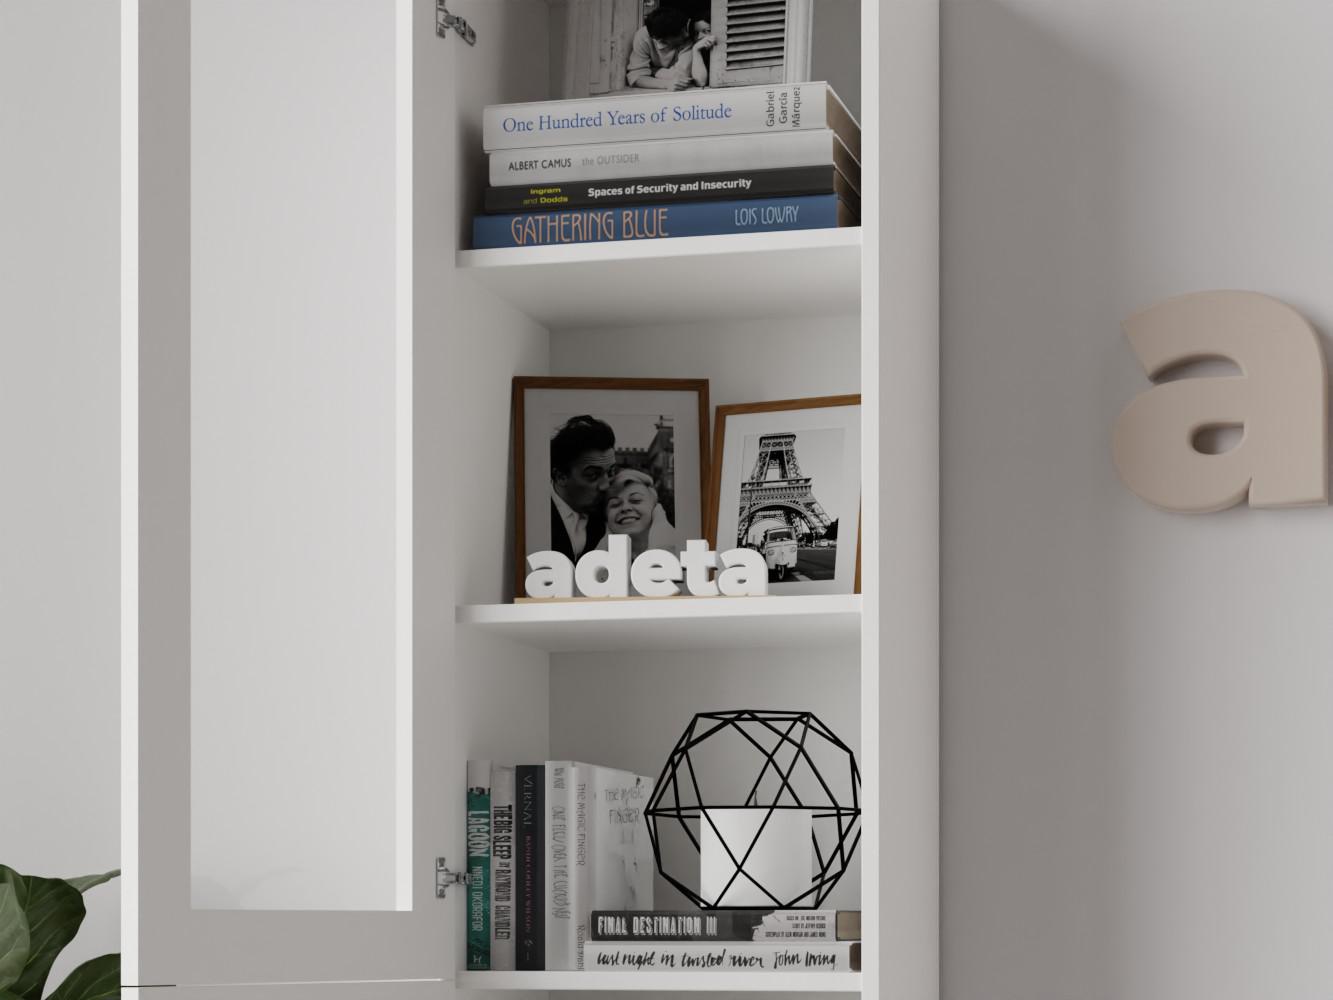 Книжный шкаф Билли 330 white ИКЕА (IKEA) изображение товара